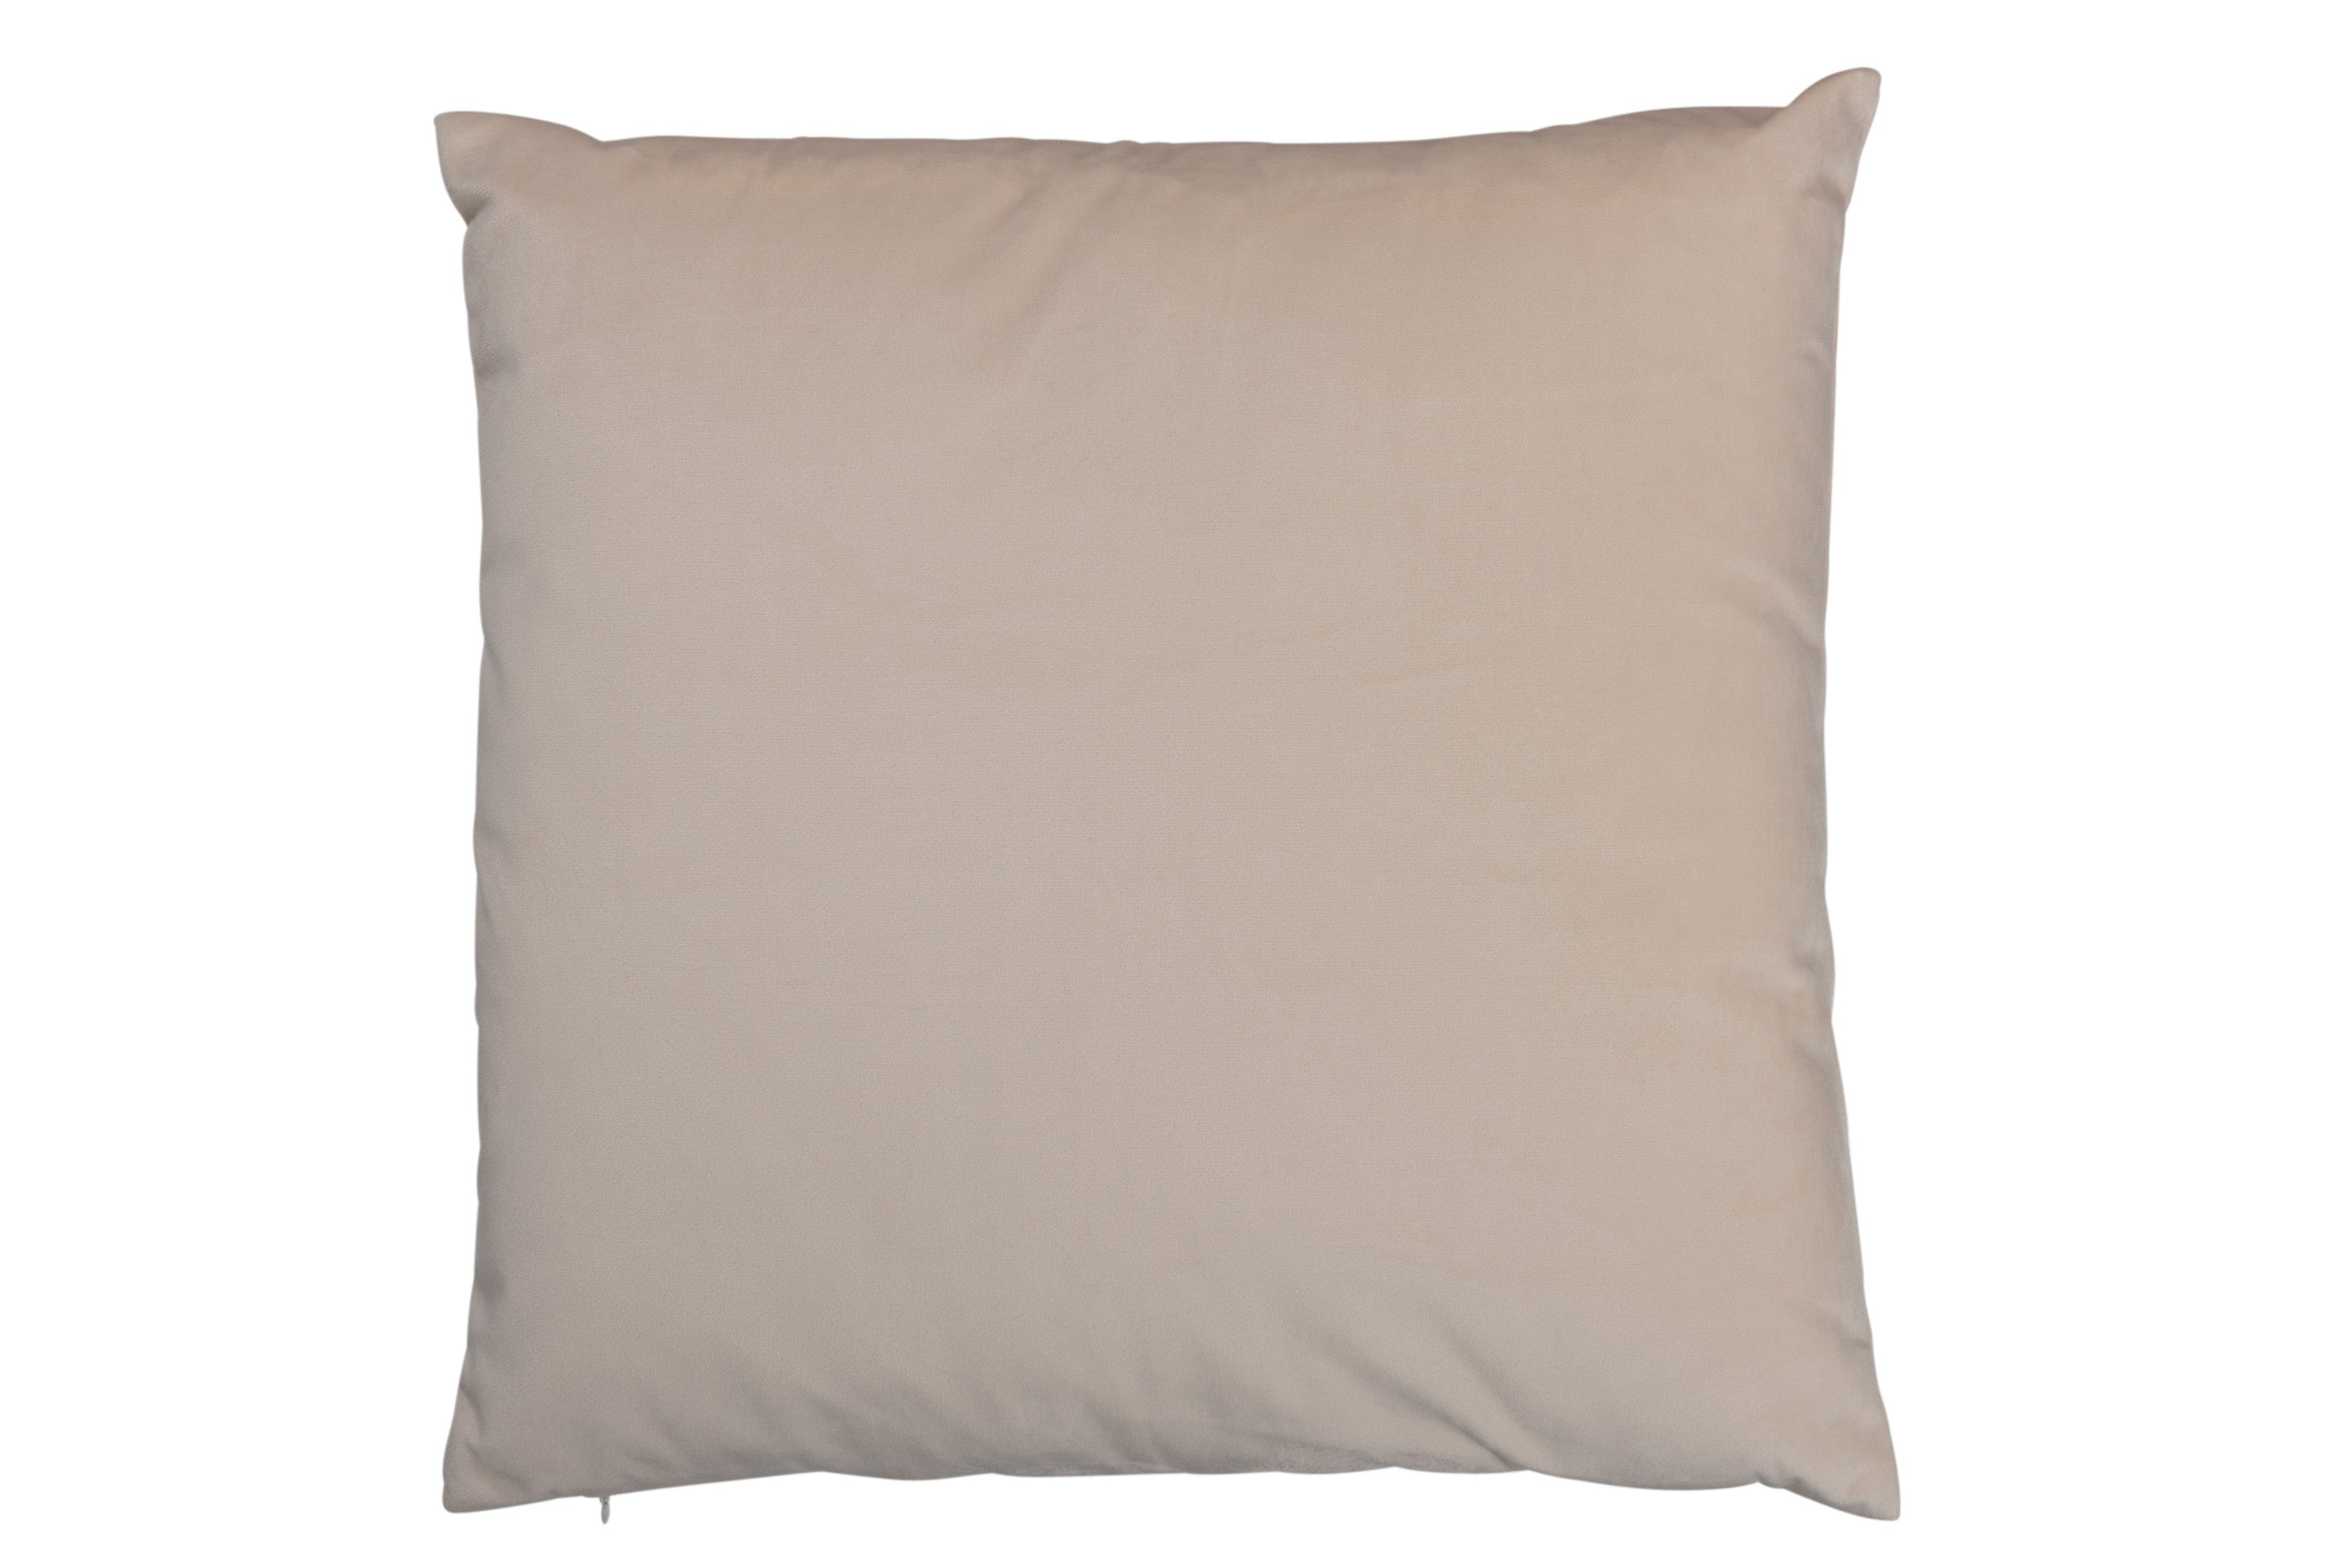 2x Cream Boune Cushion